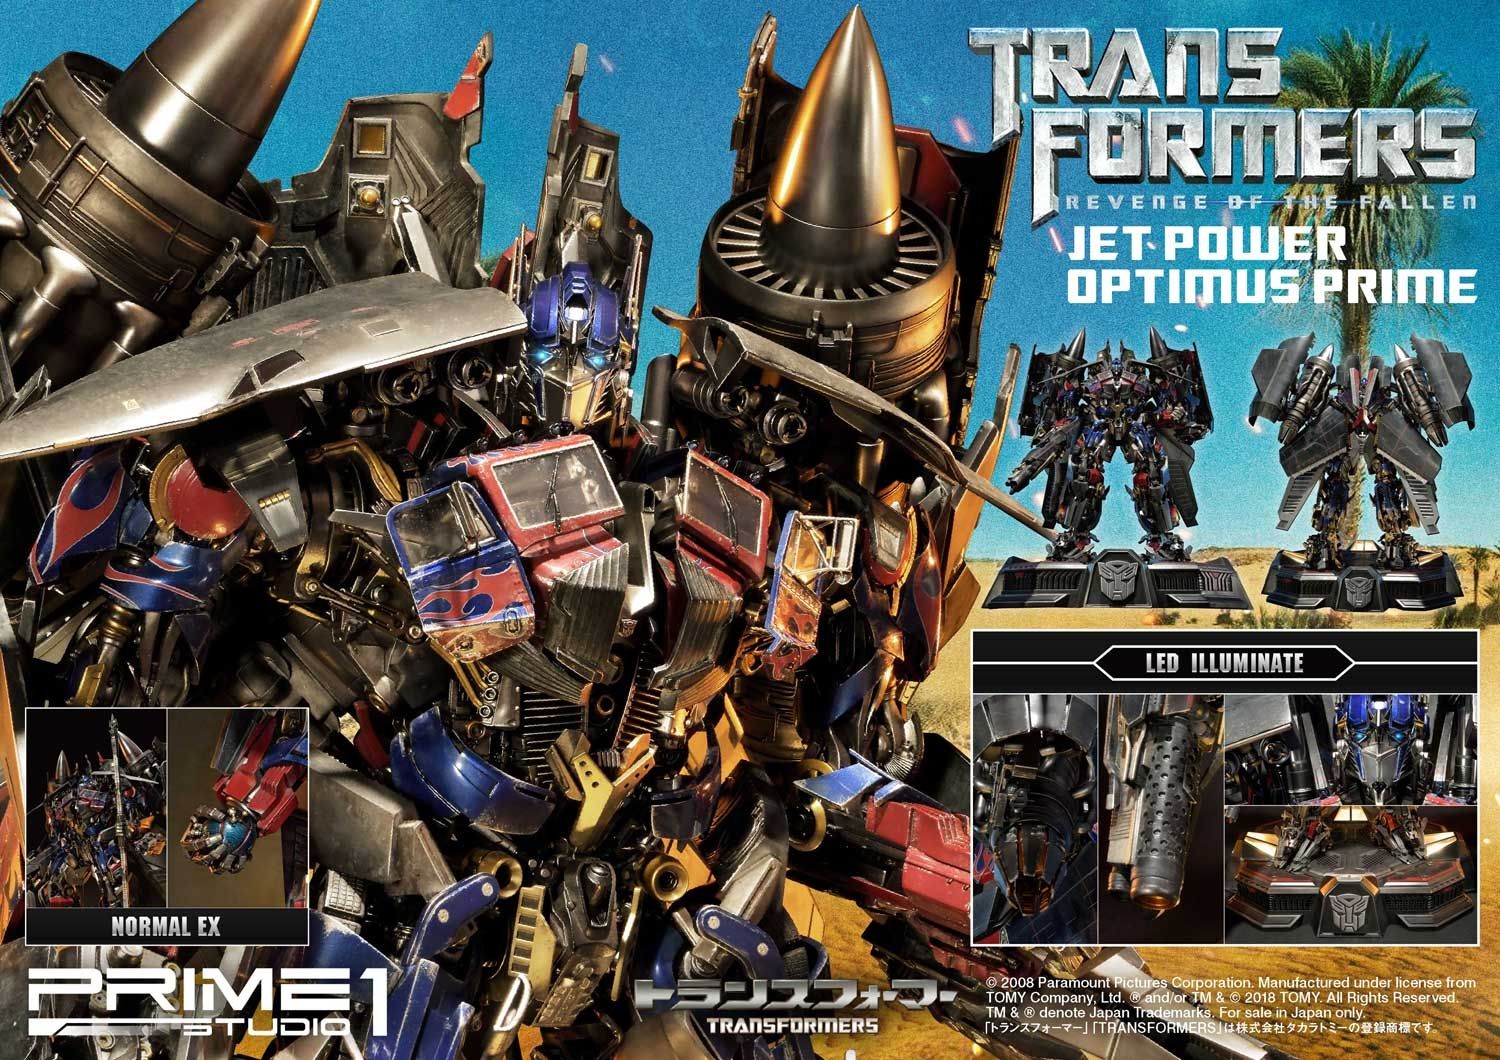 Transformers: Revenge of the Fallen - Jetpower Optimus Prime 37” Prime 1 Studios Statue